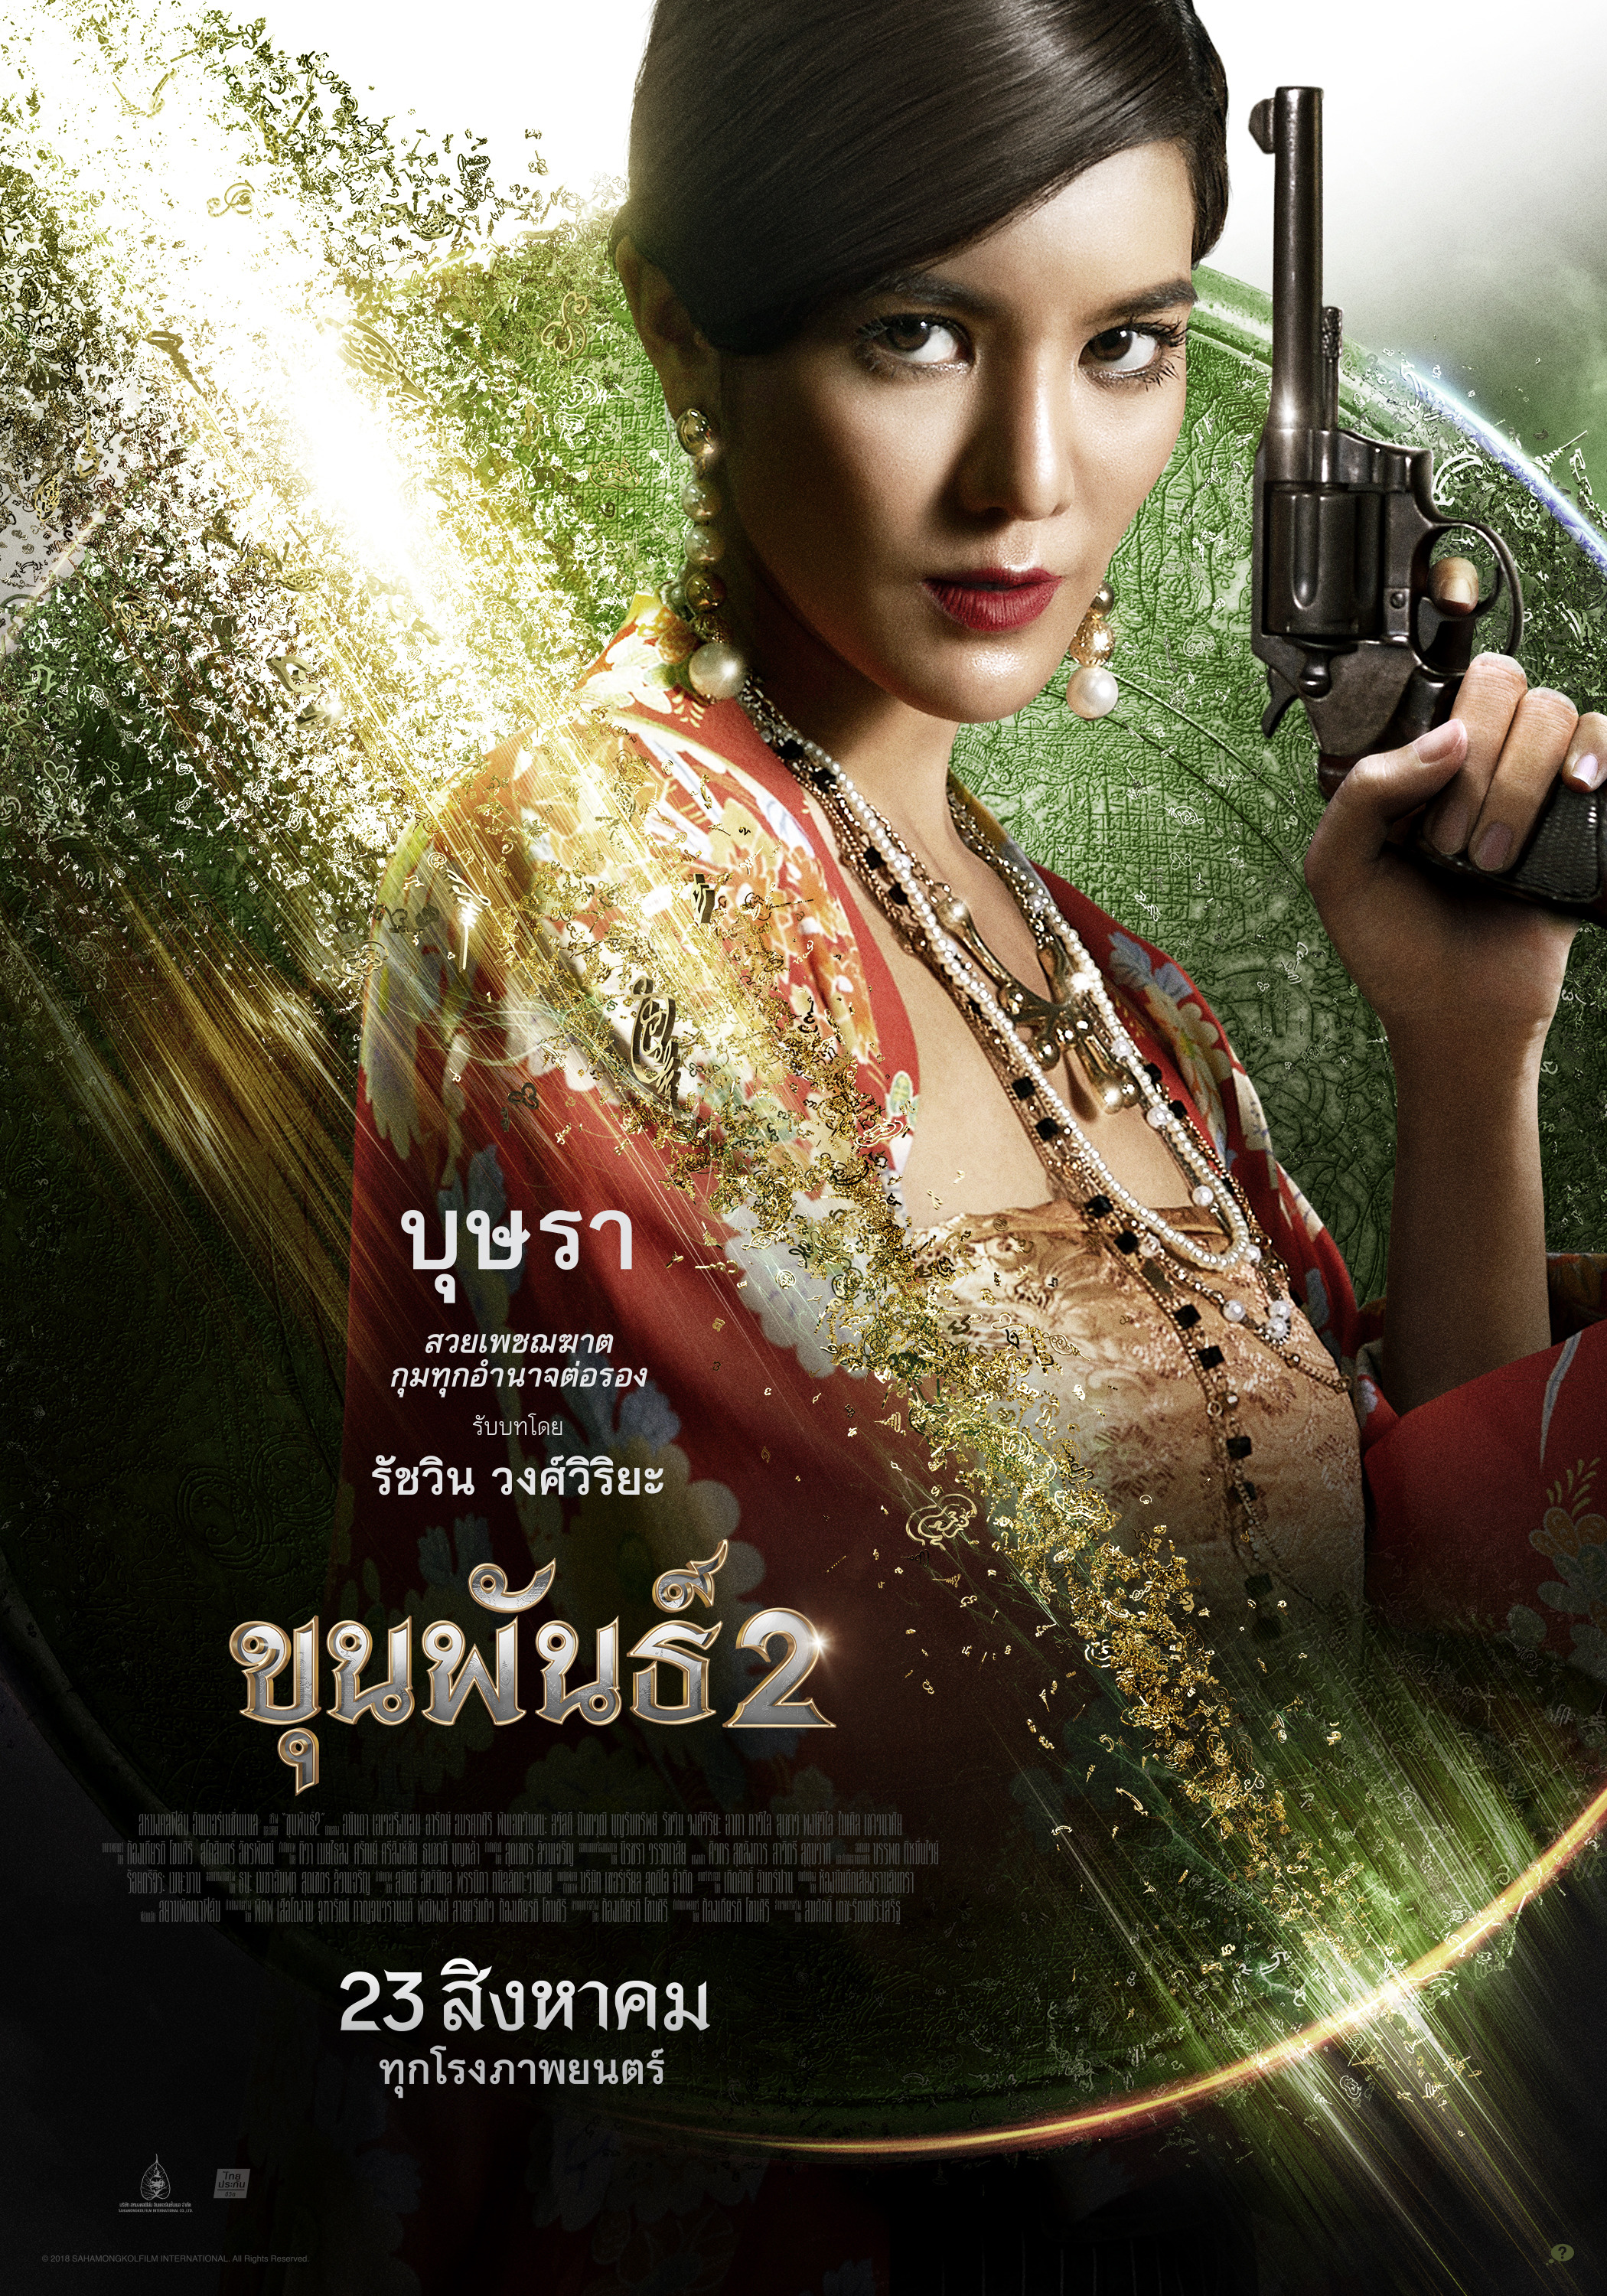 Mega Sized Movie Poster Image for Khun Phan 2 (#6 of 8)